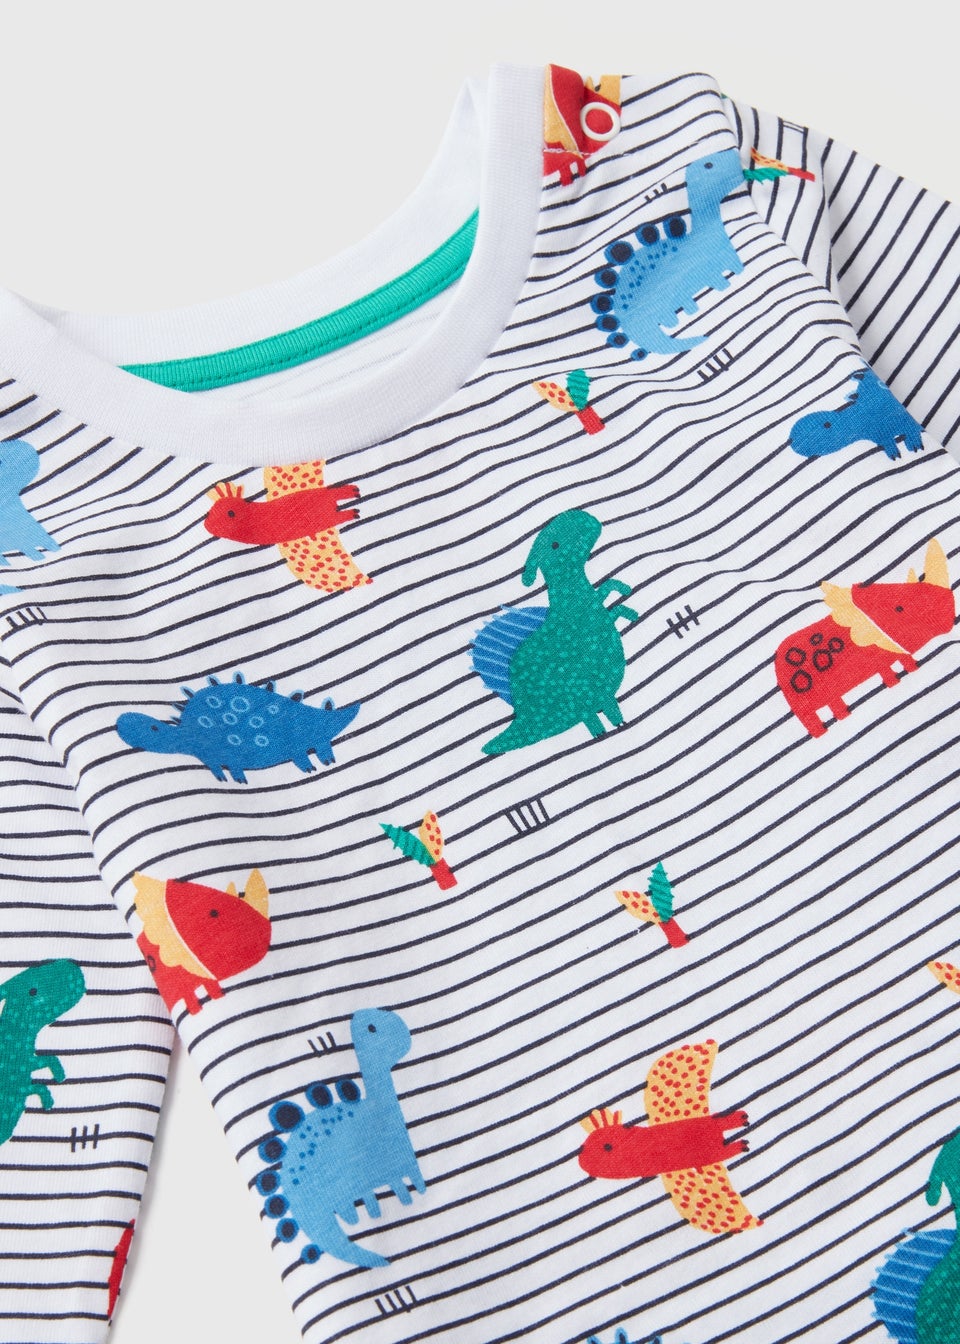 Baby Blue Dino Cargo & T-Shirt Set (Newborn-23mths)